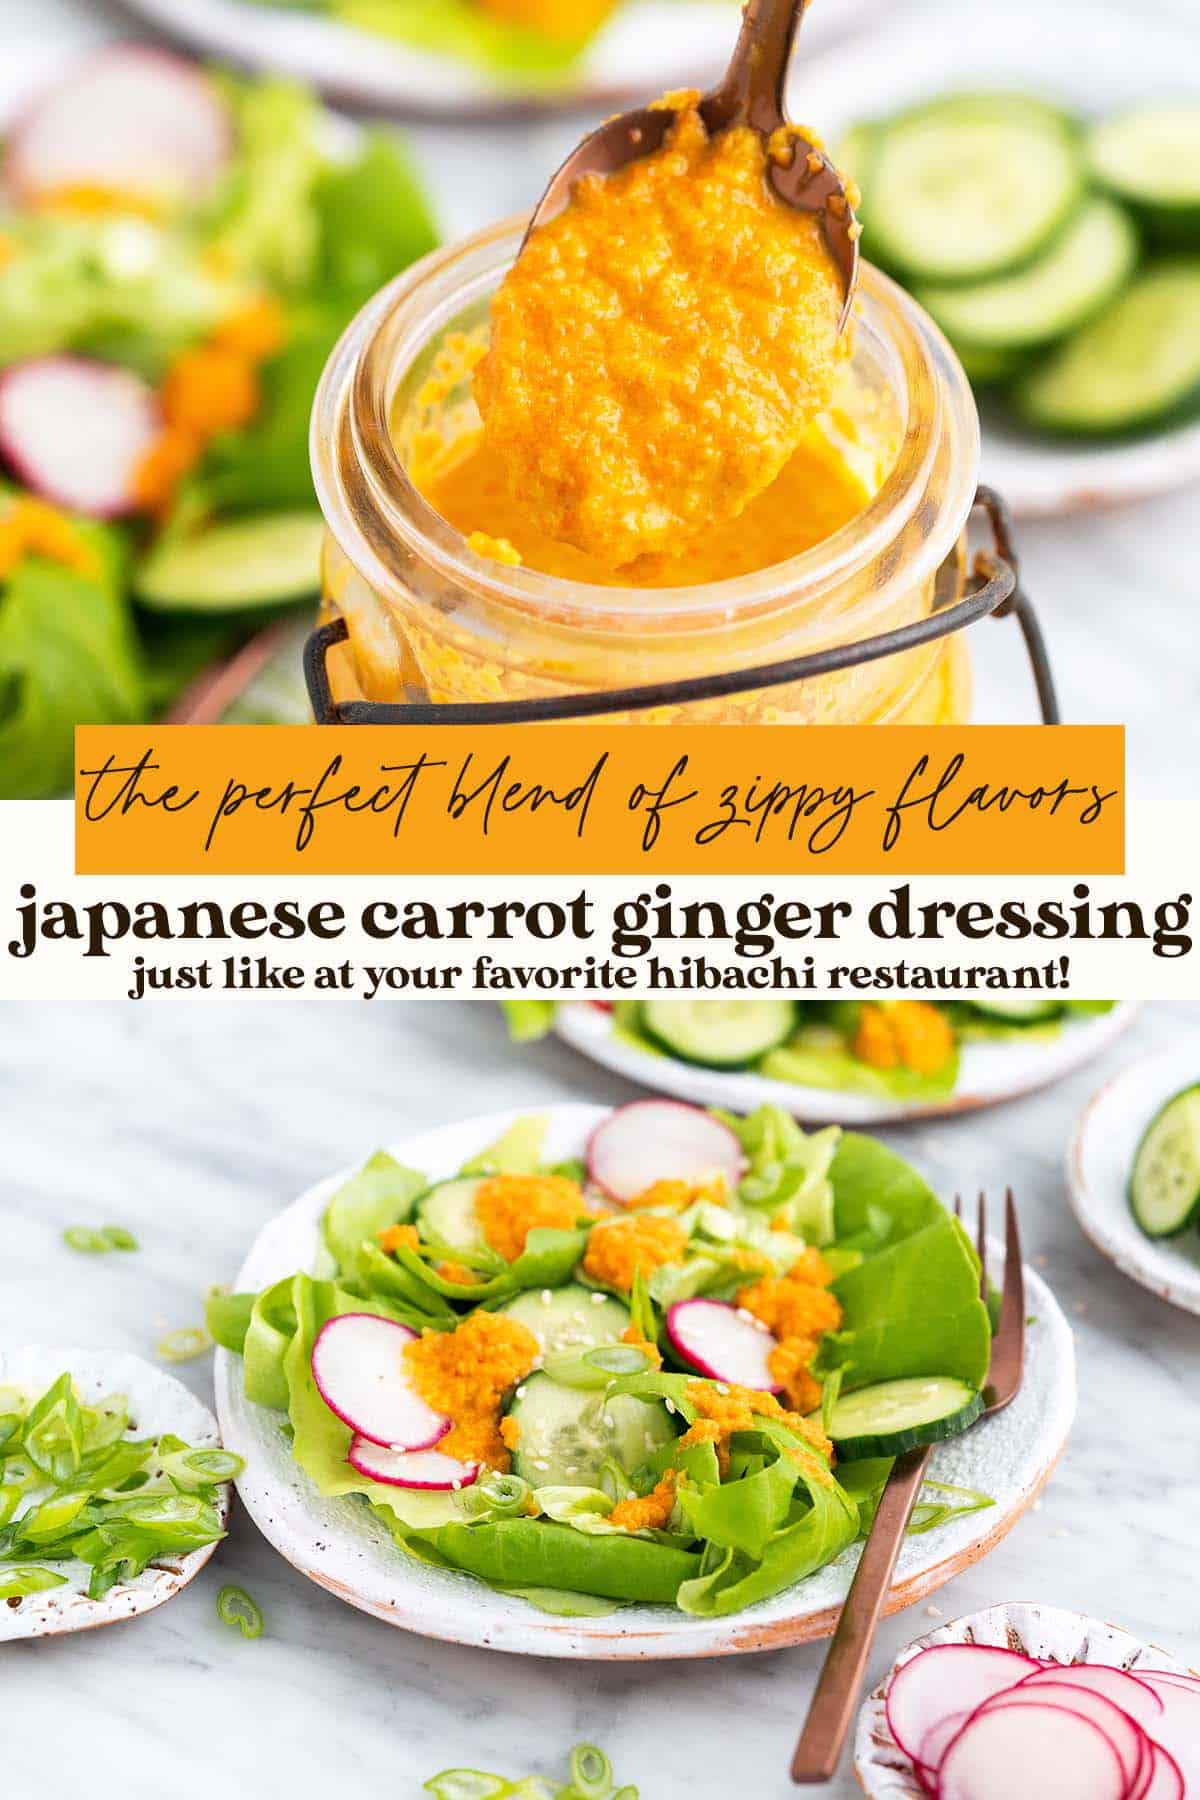 japanese carrot ginger dressing recipe pin